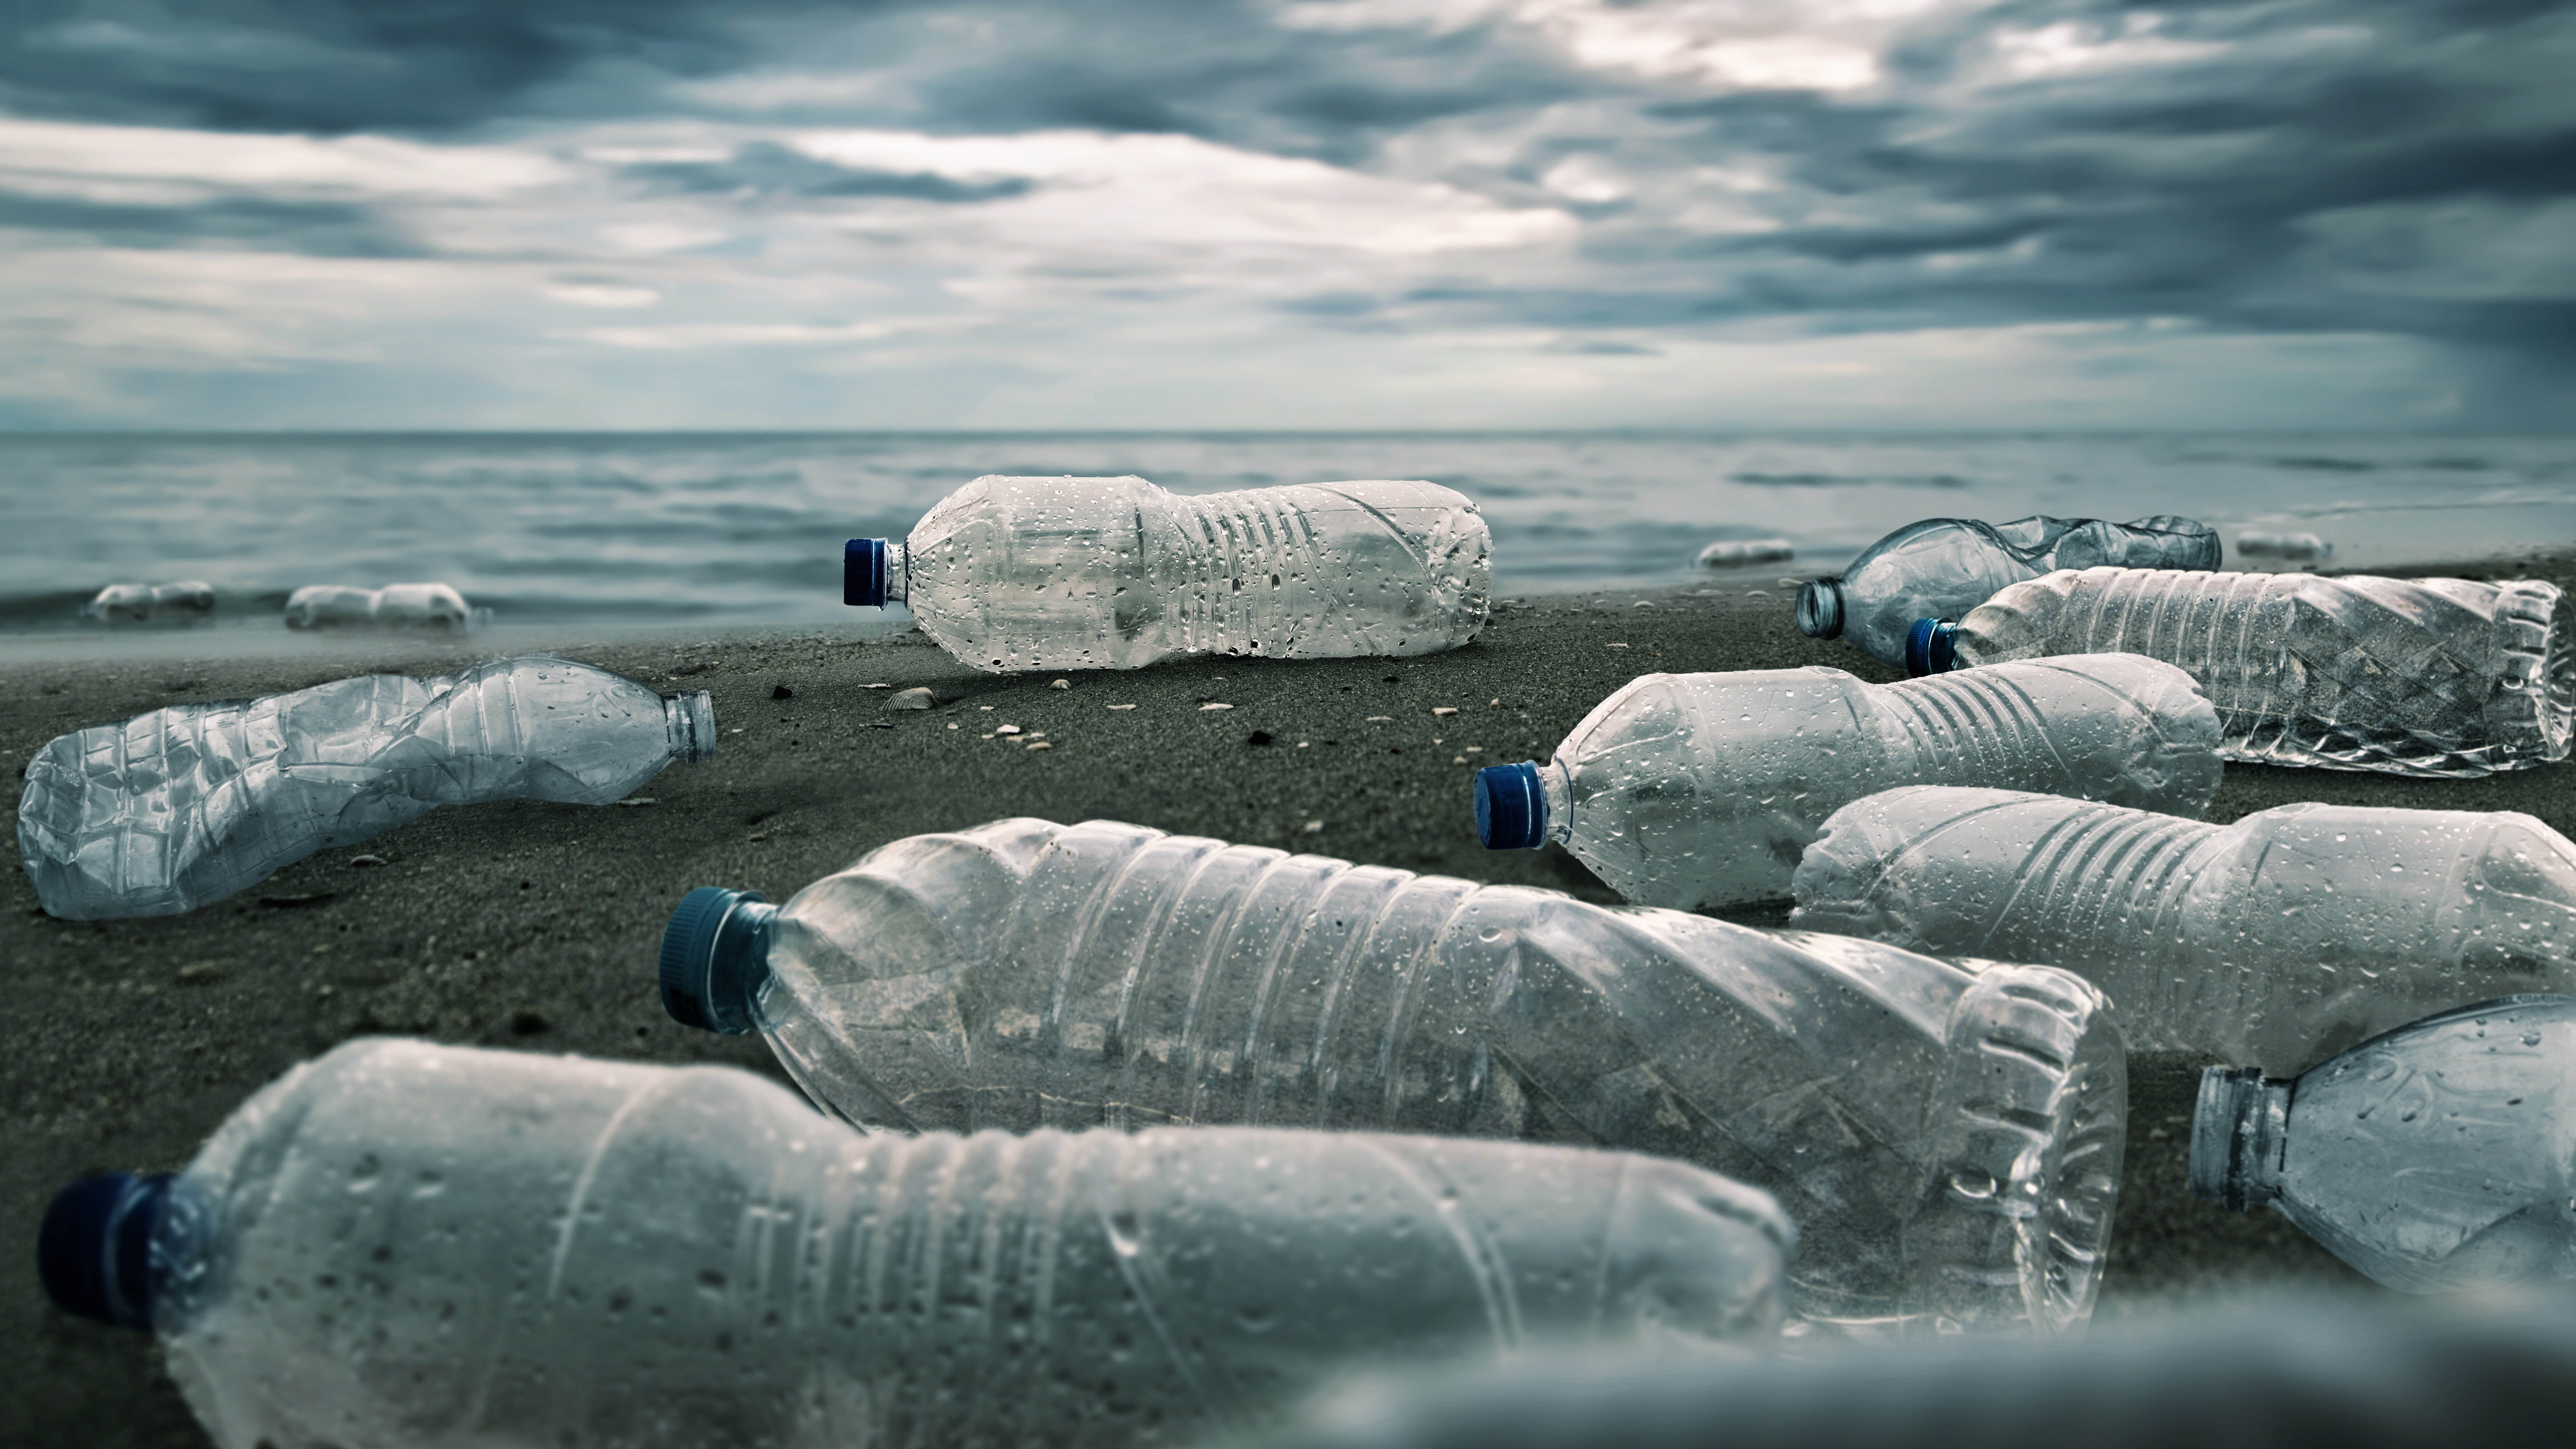 Plastic water bottles pollution in ocean (Environment concept) © chaiyapruek - stock.adobe.com